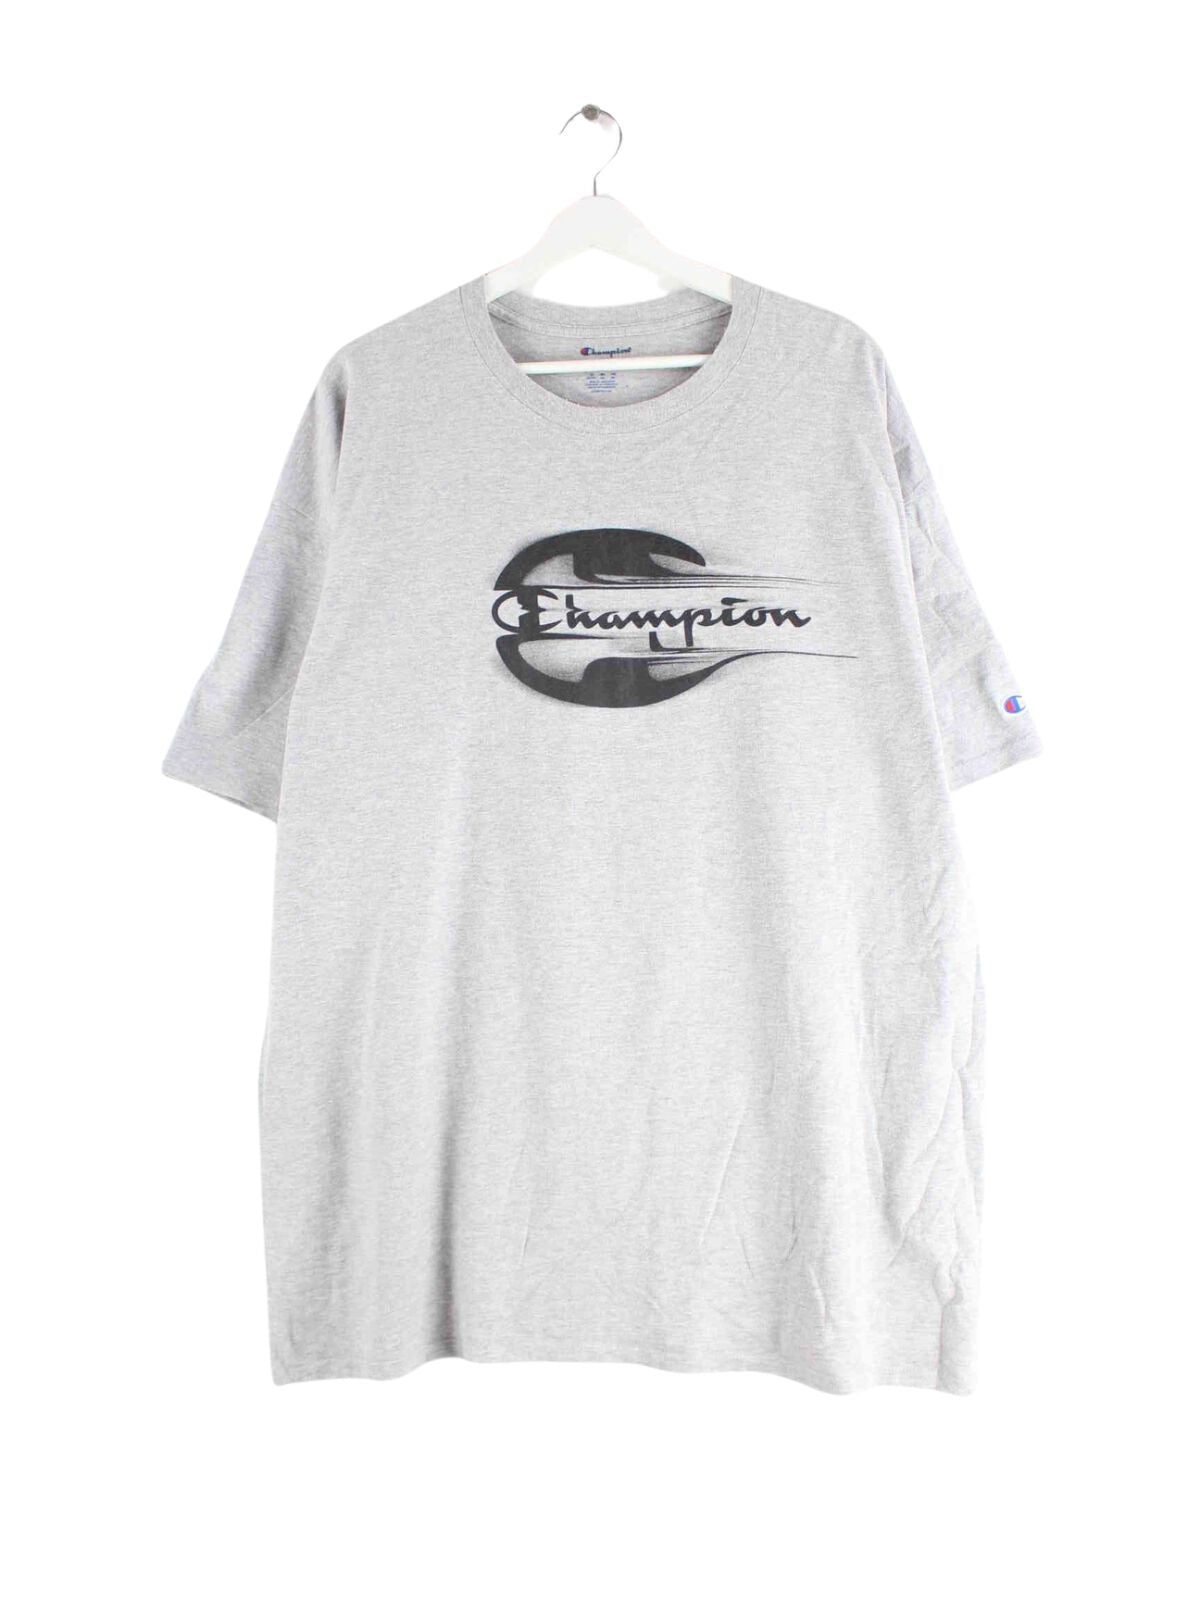 Champion Print T-Shirt Grau 3XL (front image)